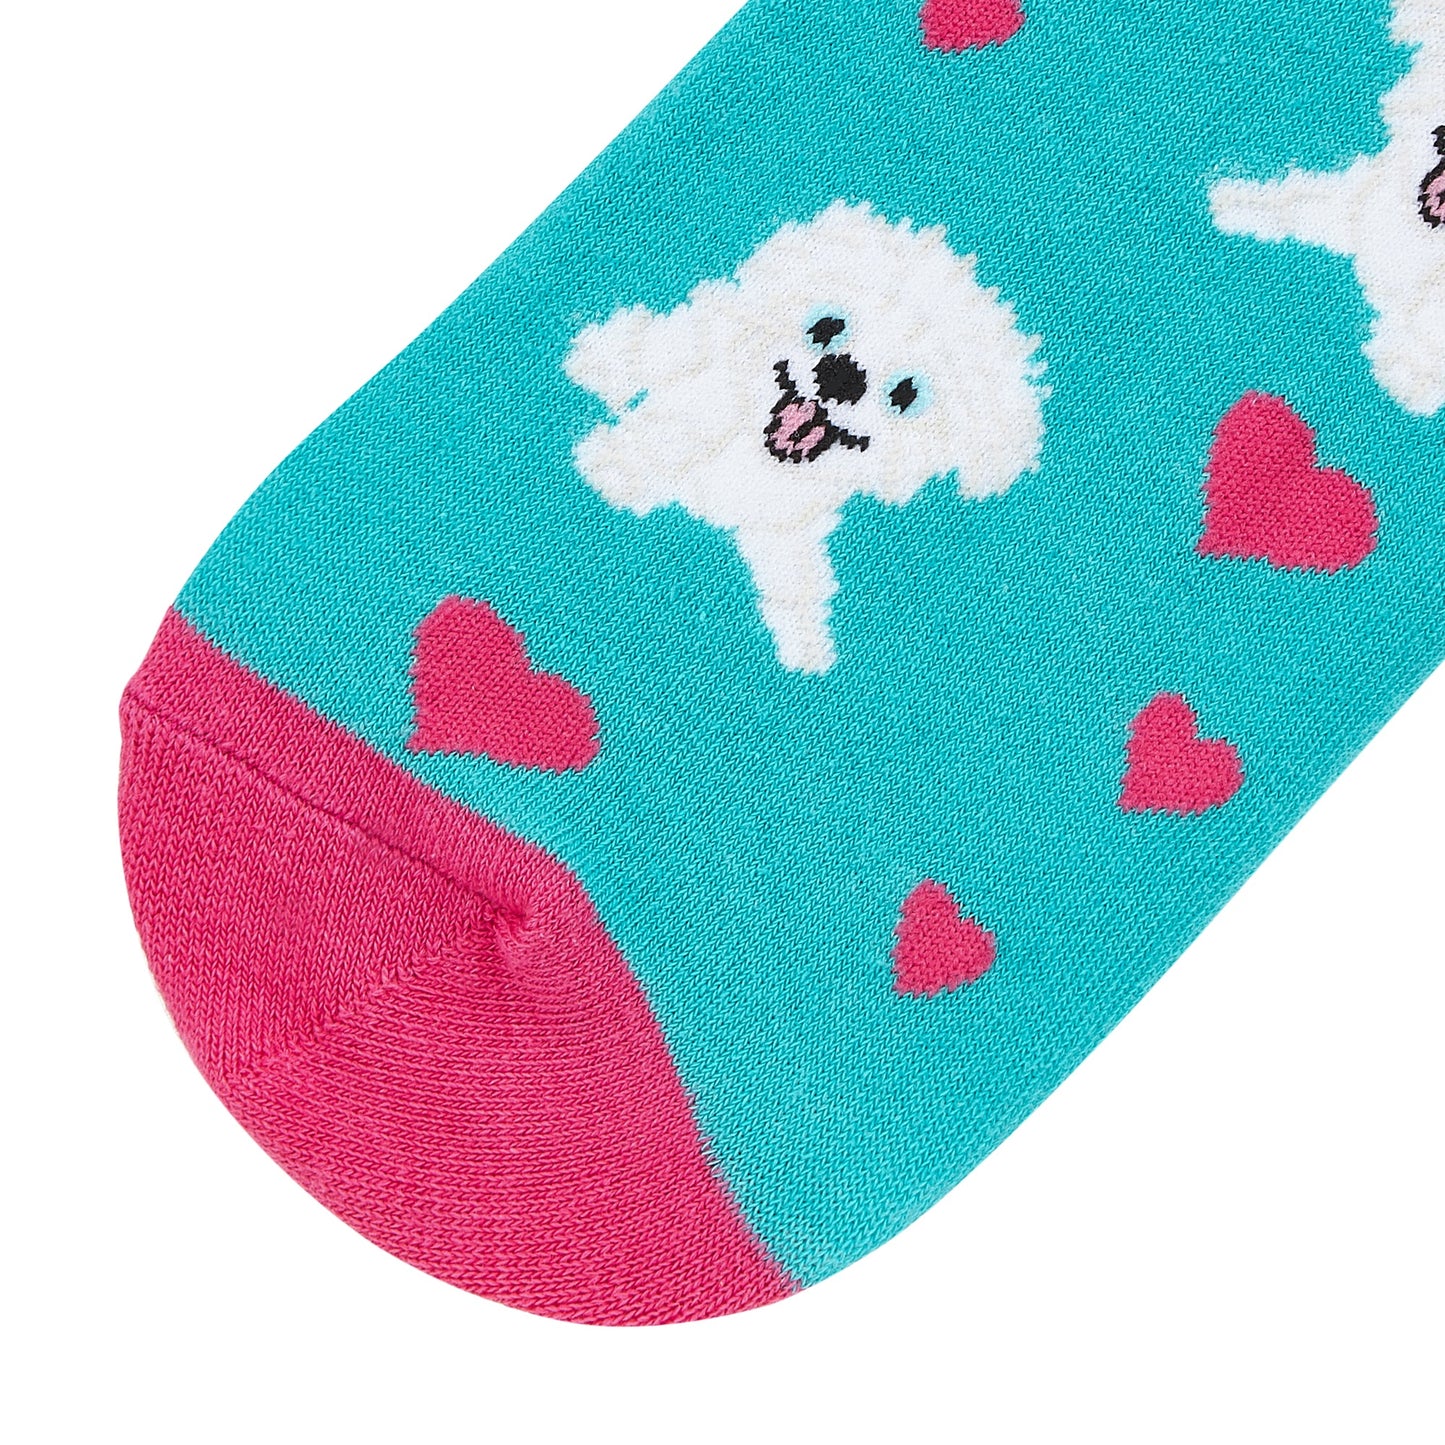 IDENTITY Poodle Love Printed Crew Length Socks